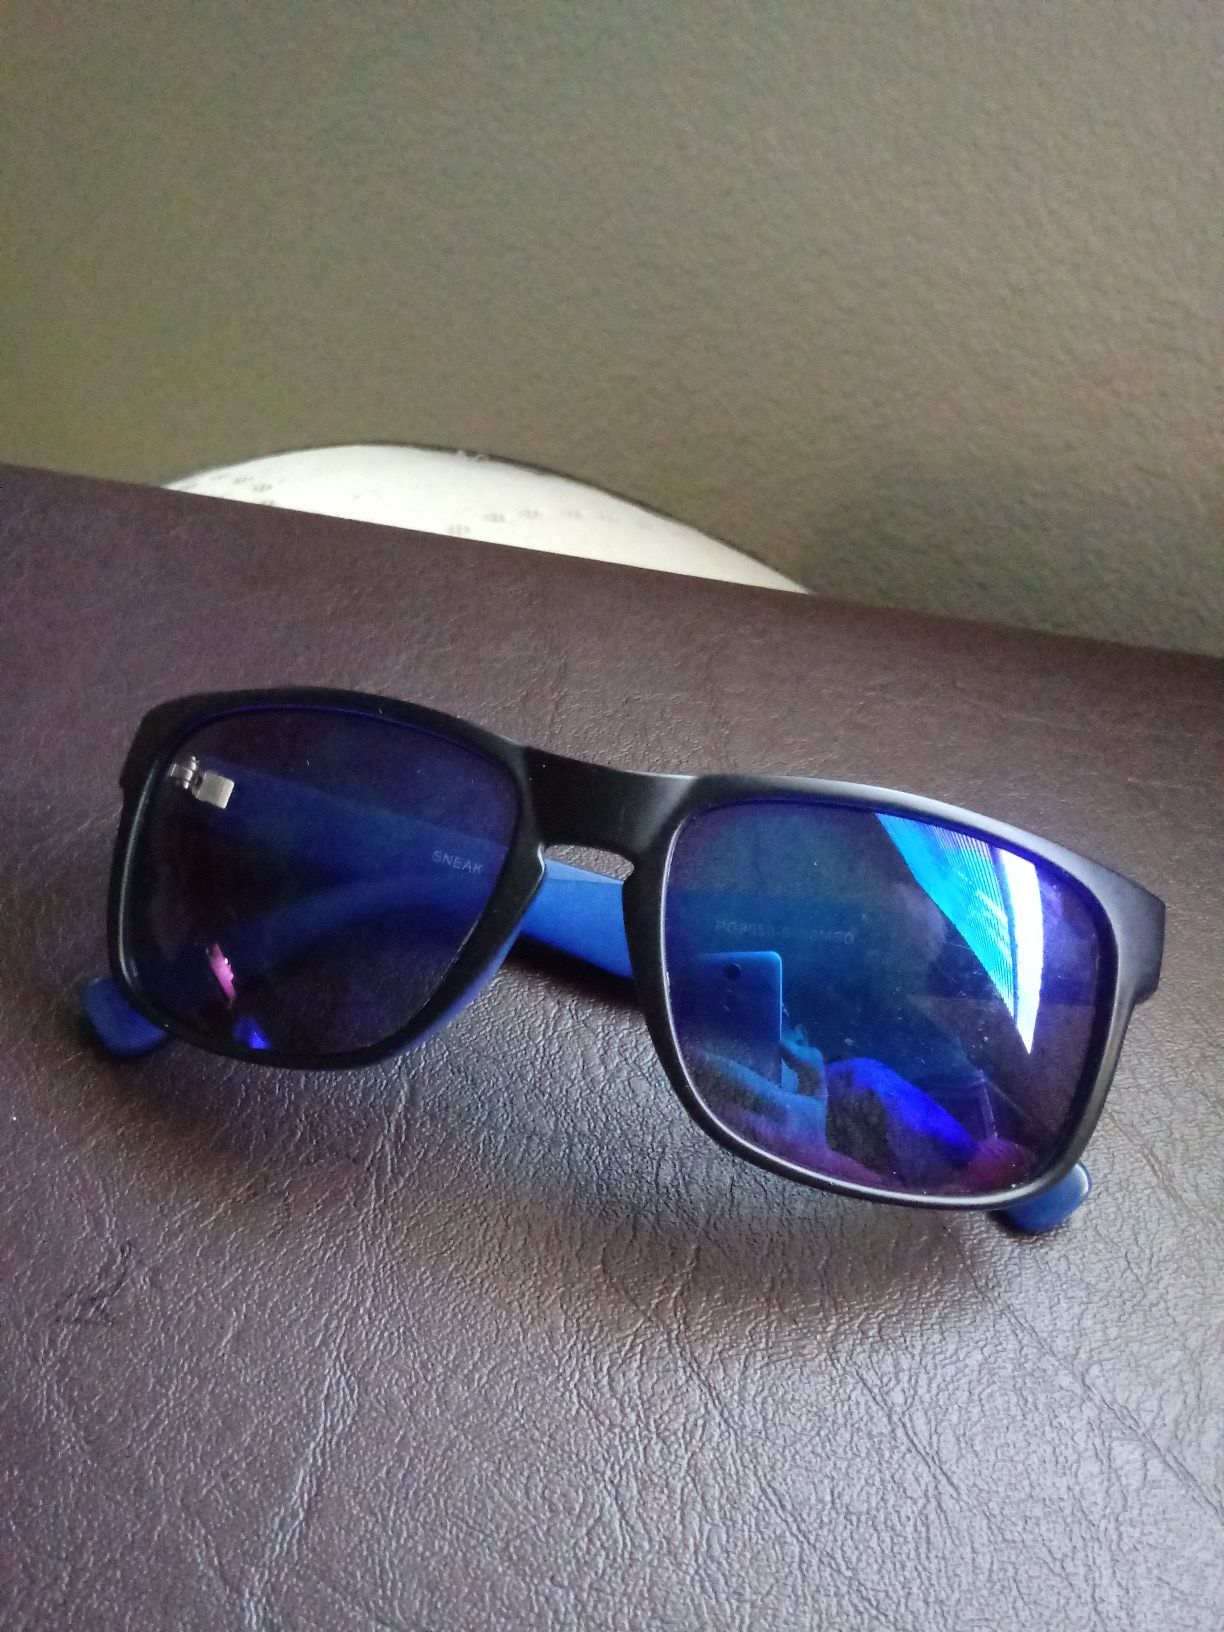 Polarized sunglasses (blue & black)